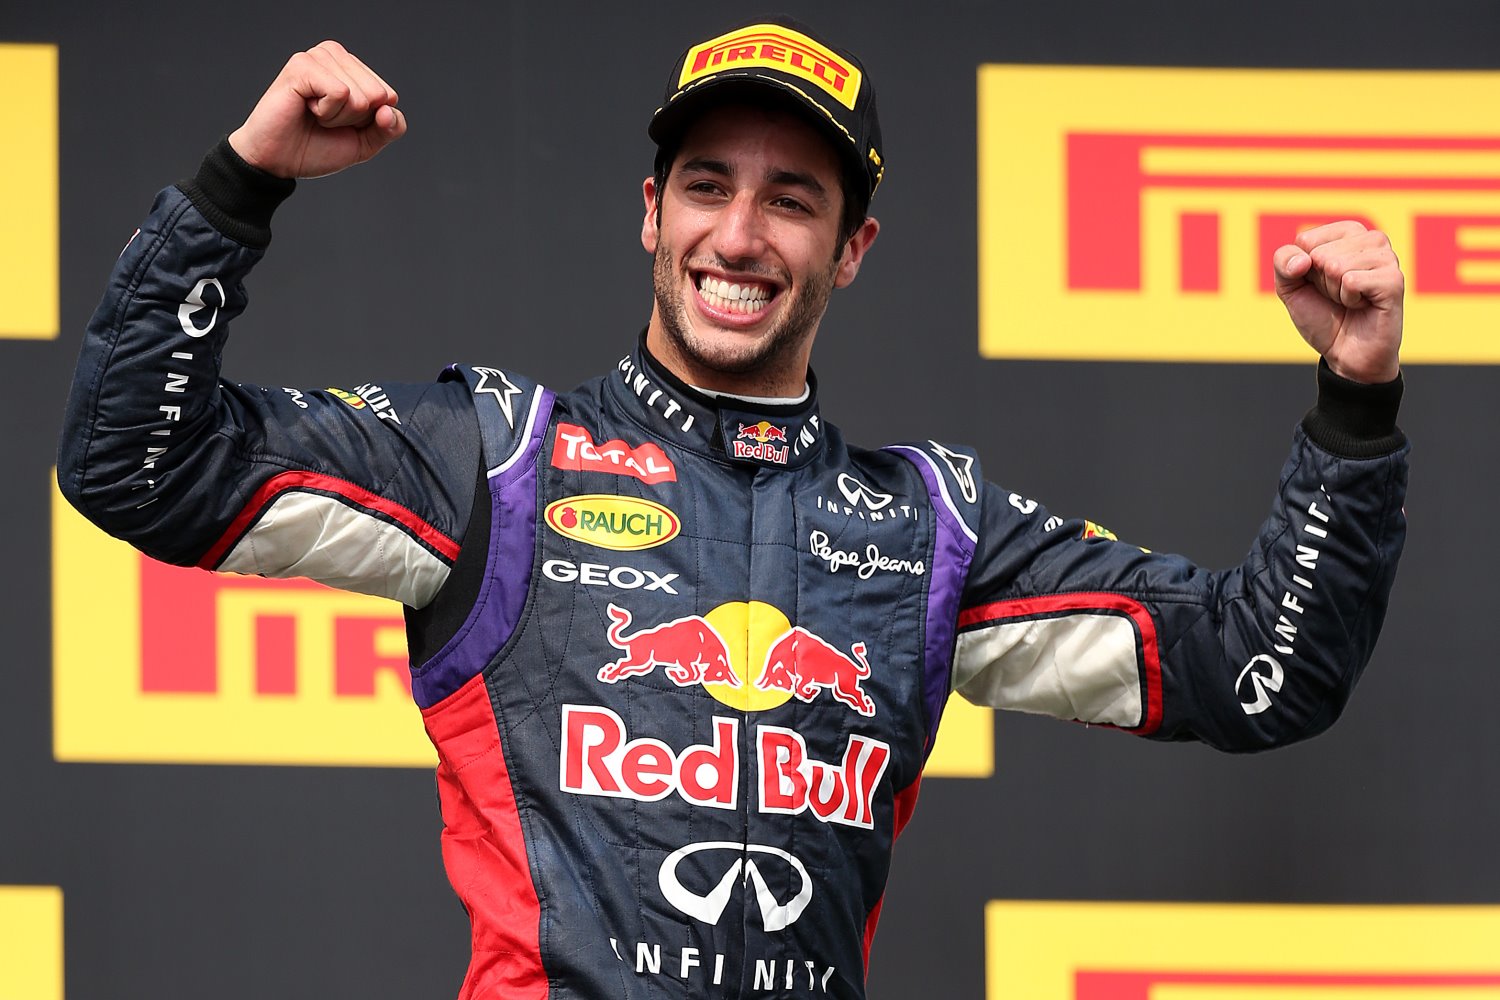 Ricciardo drives masterful race to win in Hungary – AutoRacing1.com